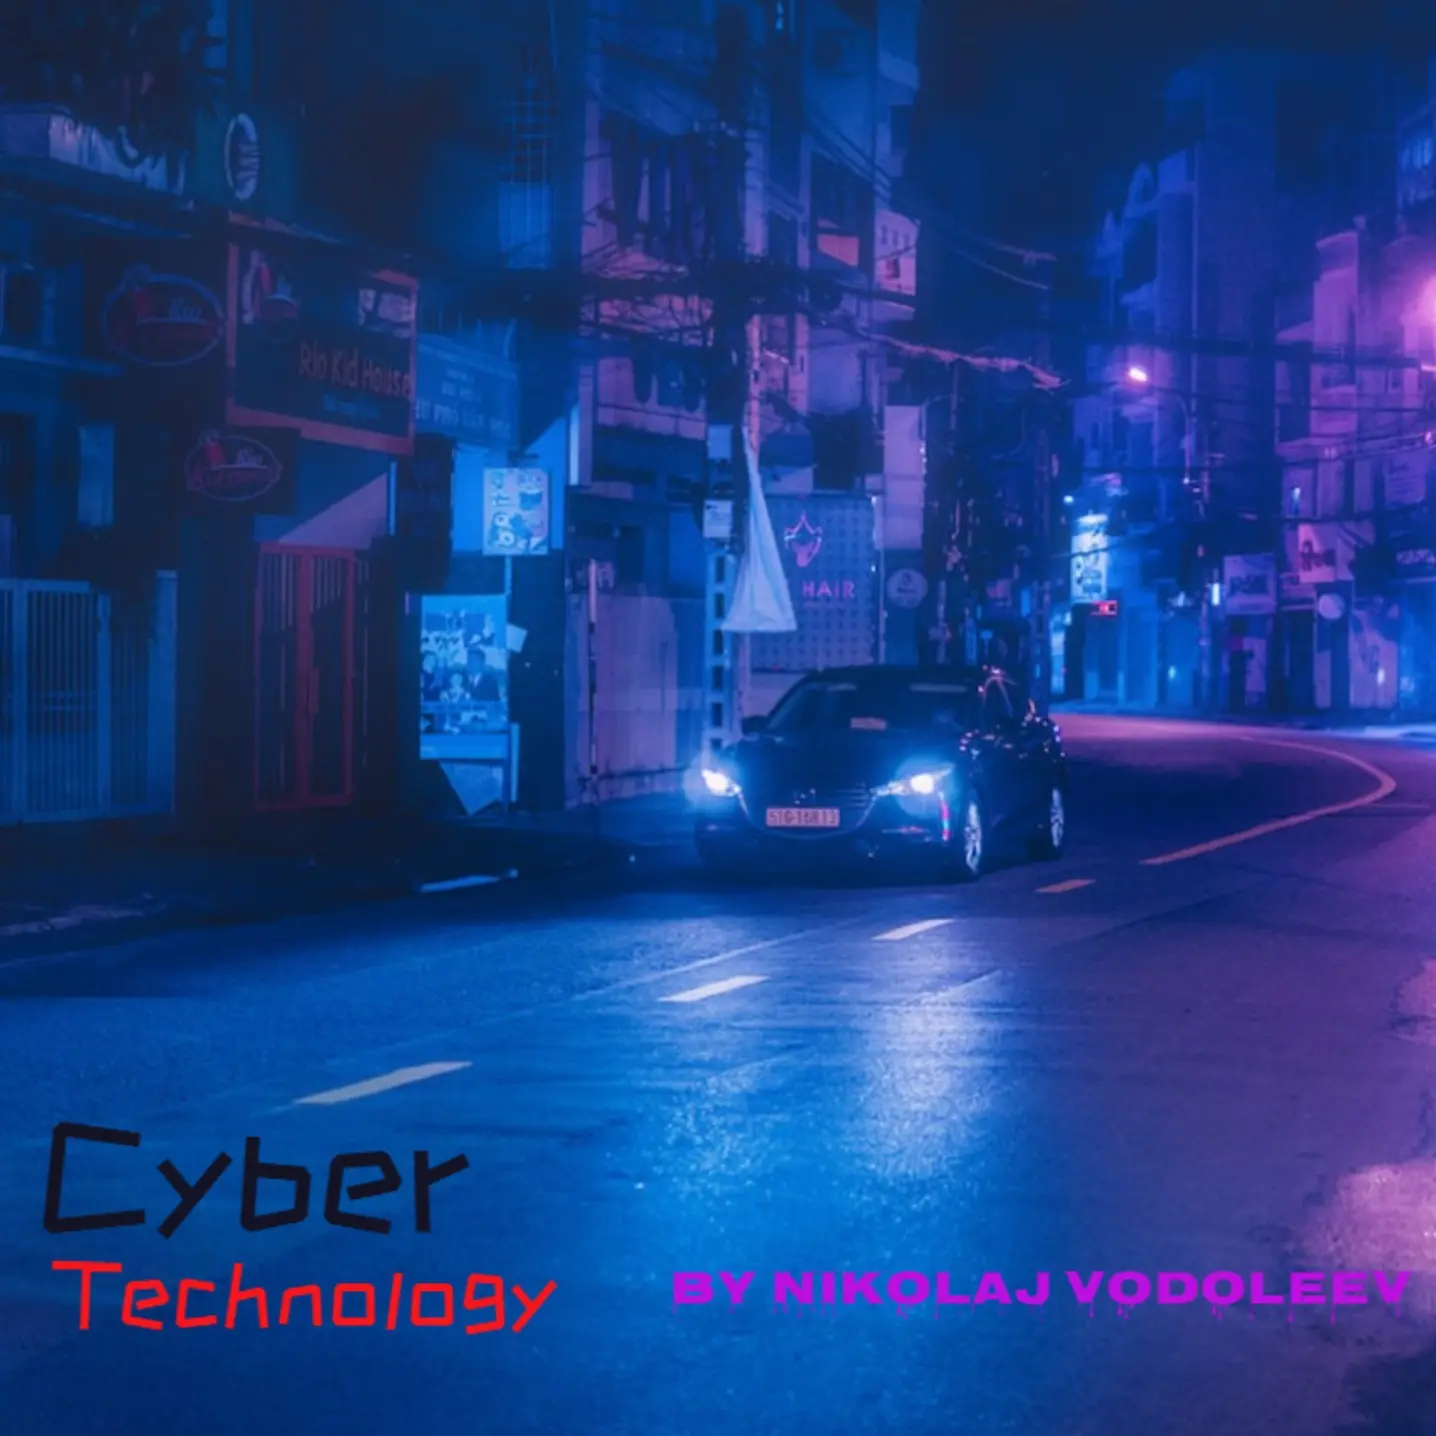 Cyber Technology